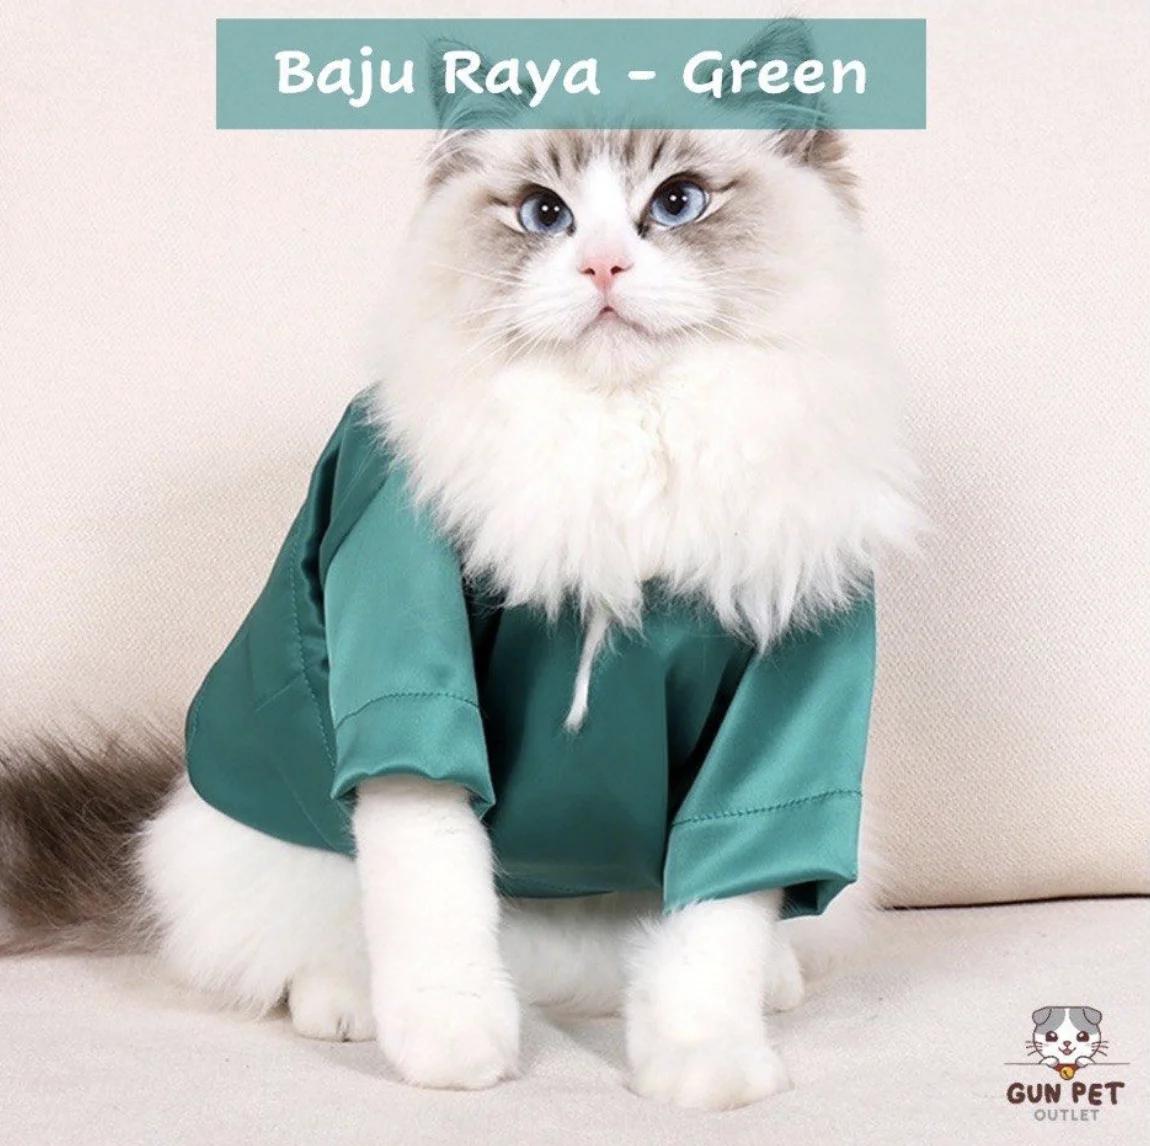 Carousell - Thrifted Baju Raya + Baju Raya for Cats